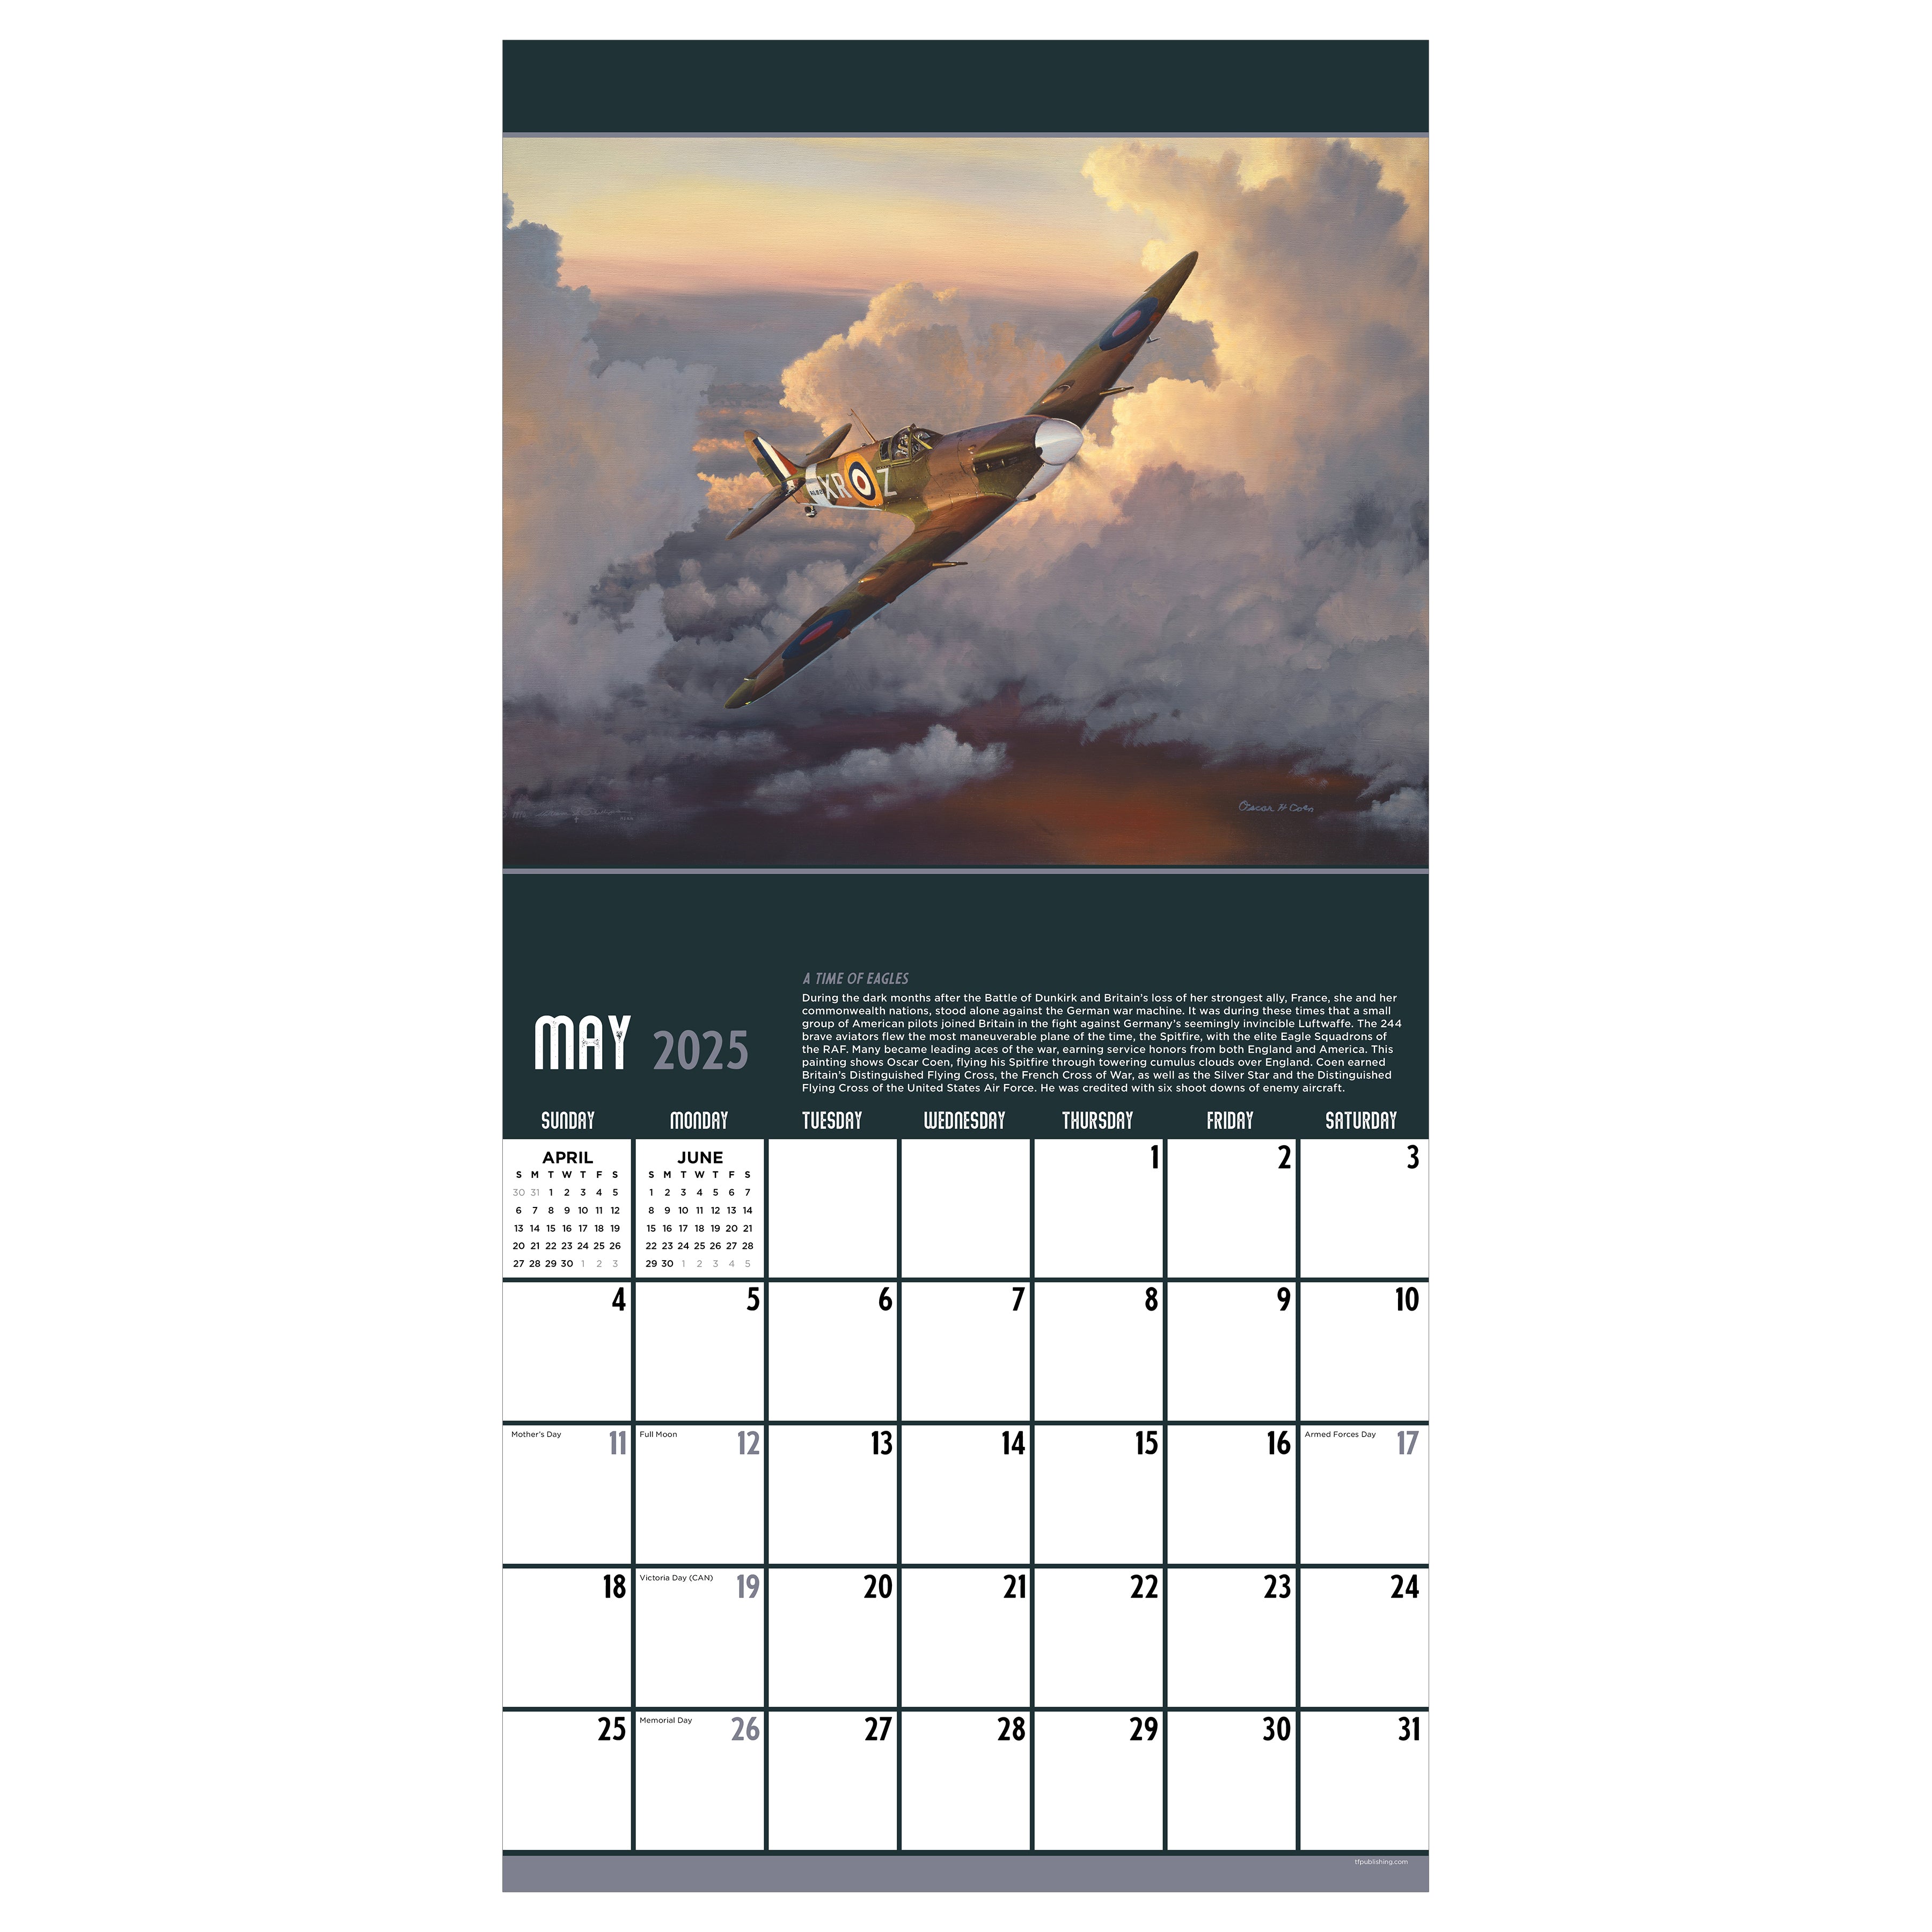 2025 American Aviation - Square Wall Calendar